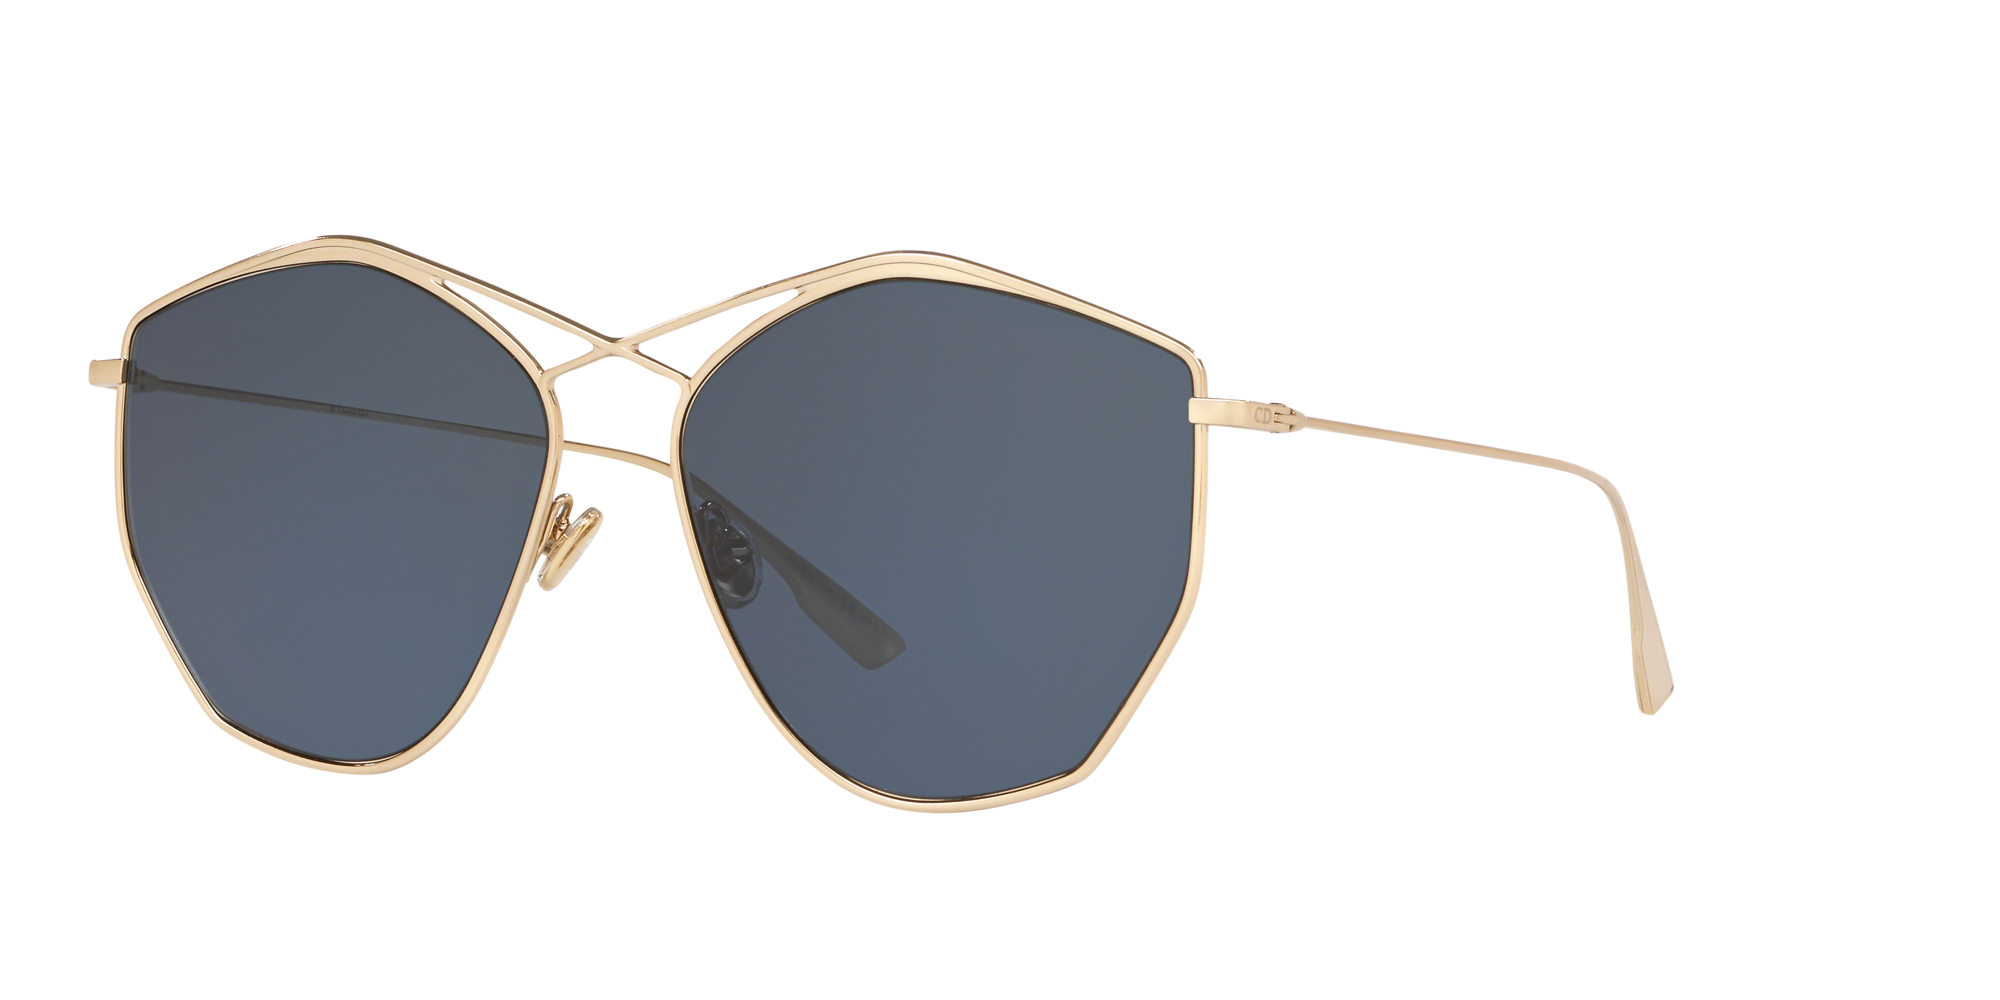 christian dior gold sunglasses